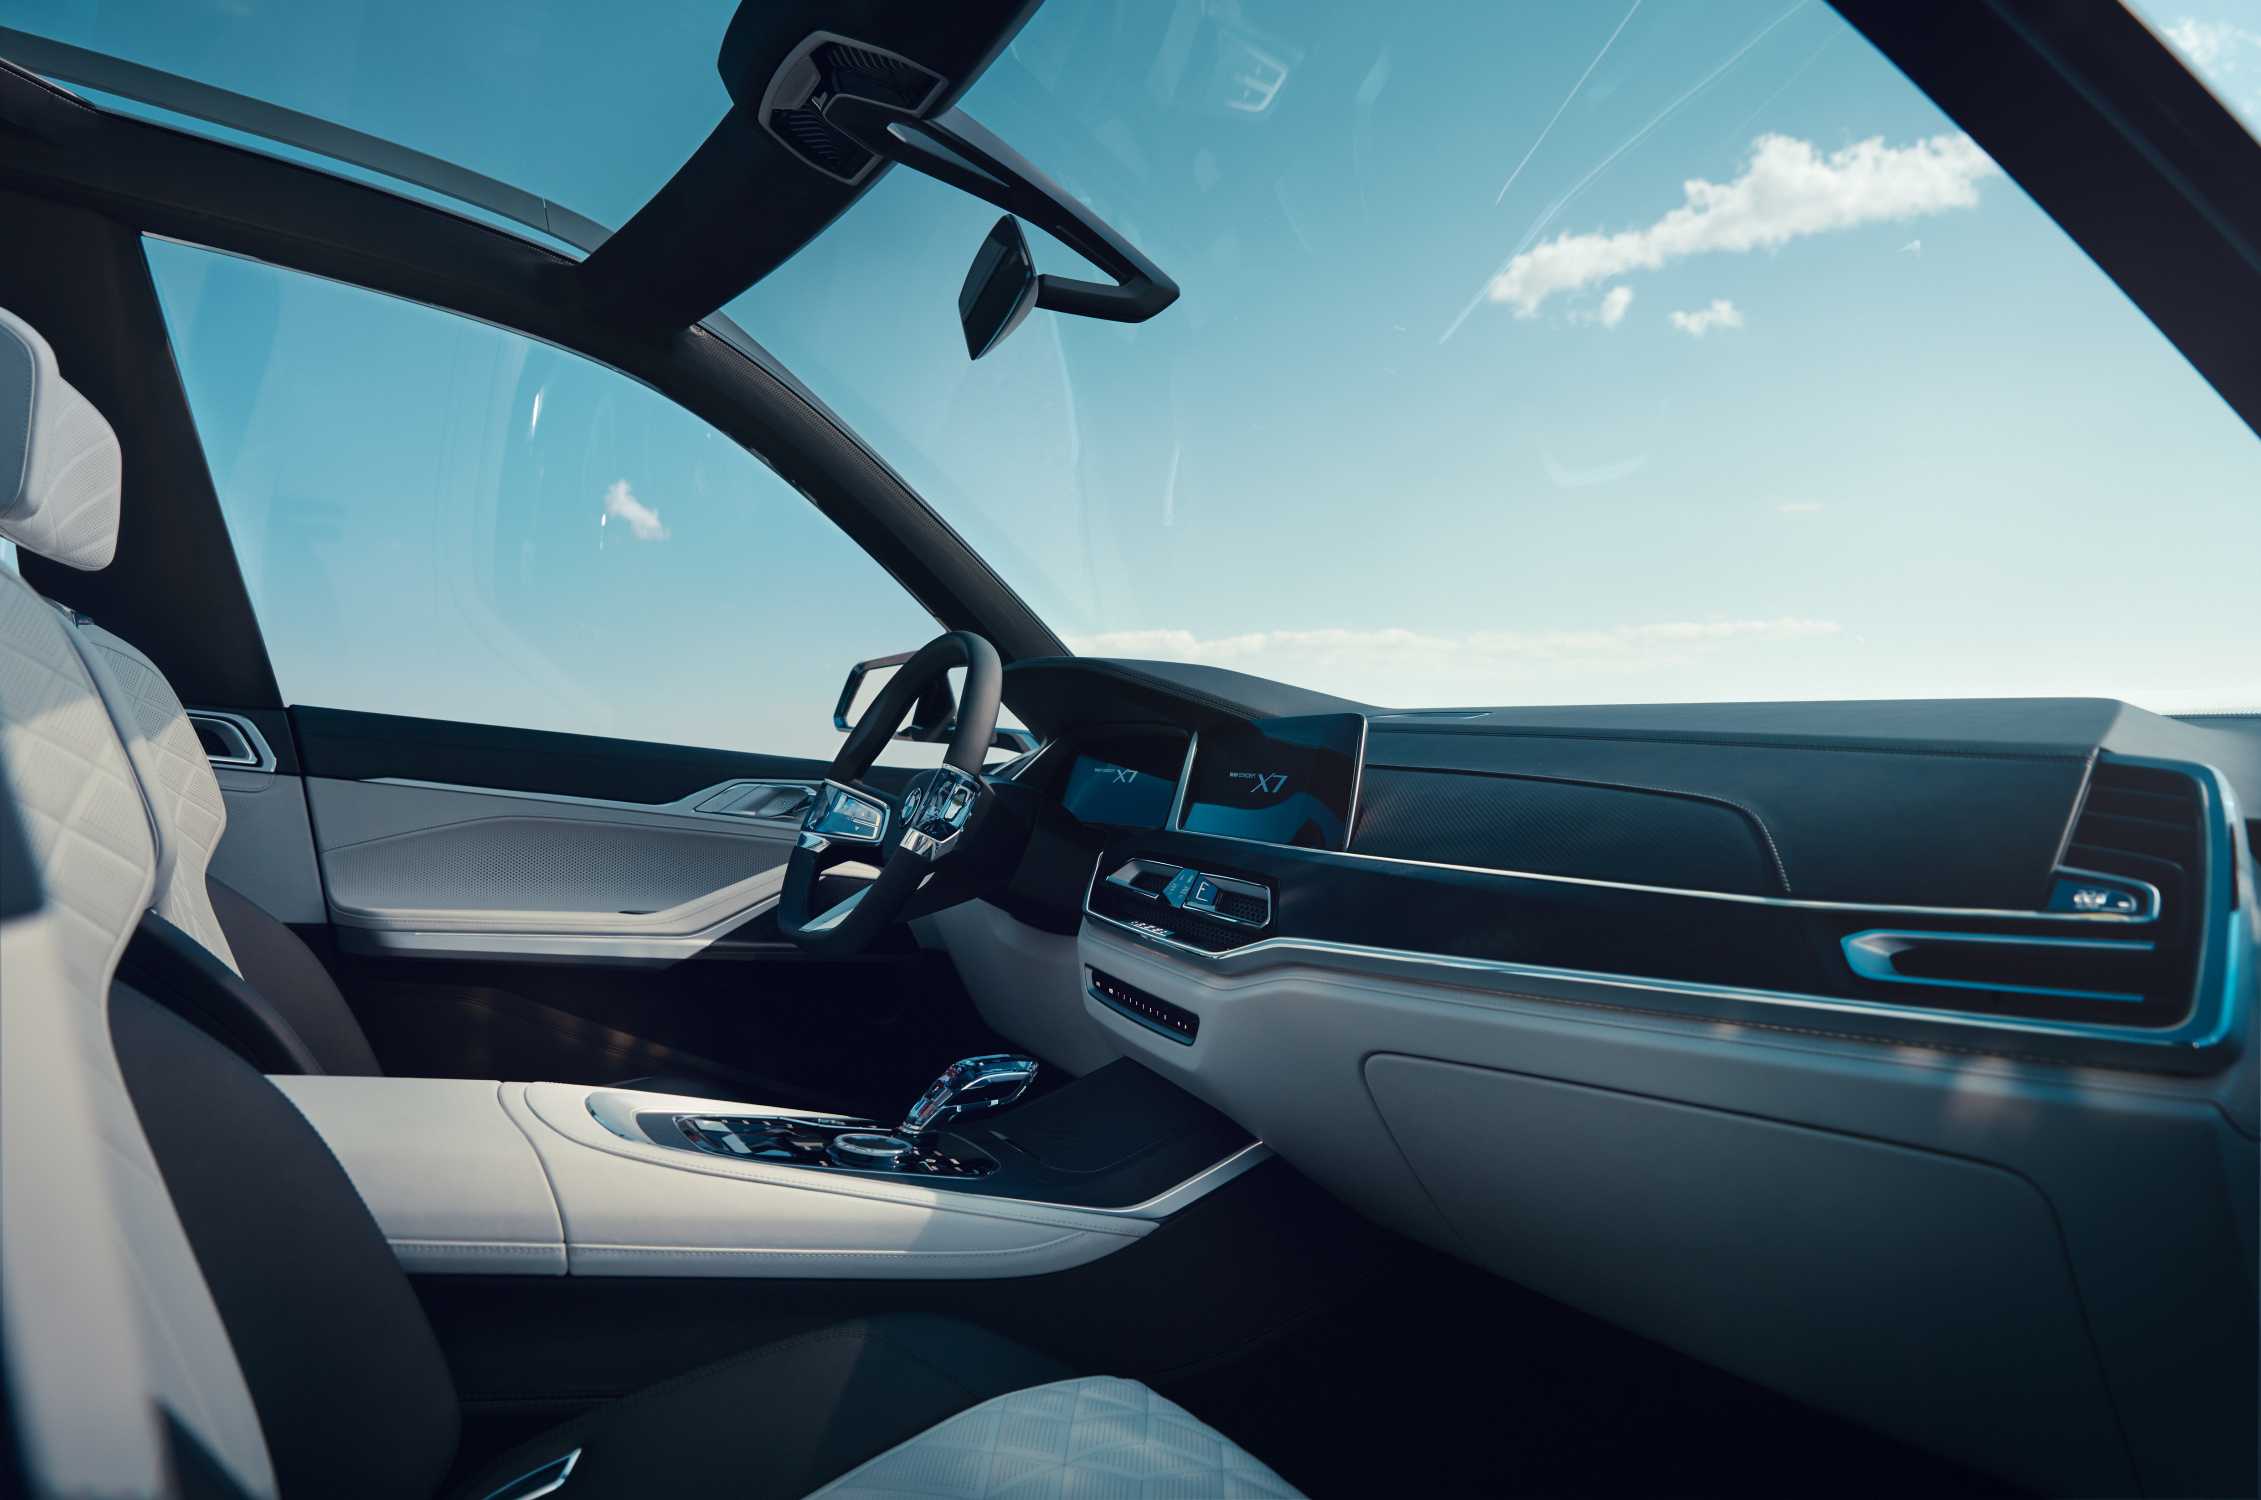 Bmw x7 год. БМВ x7 концепт. BMW Concept x7 IPERFORMANCE. BMW x7 Interior. BMW x7 2017.